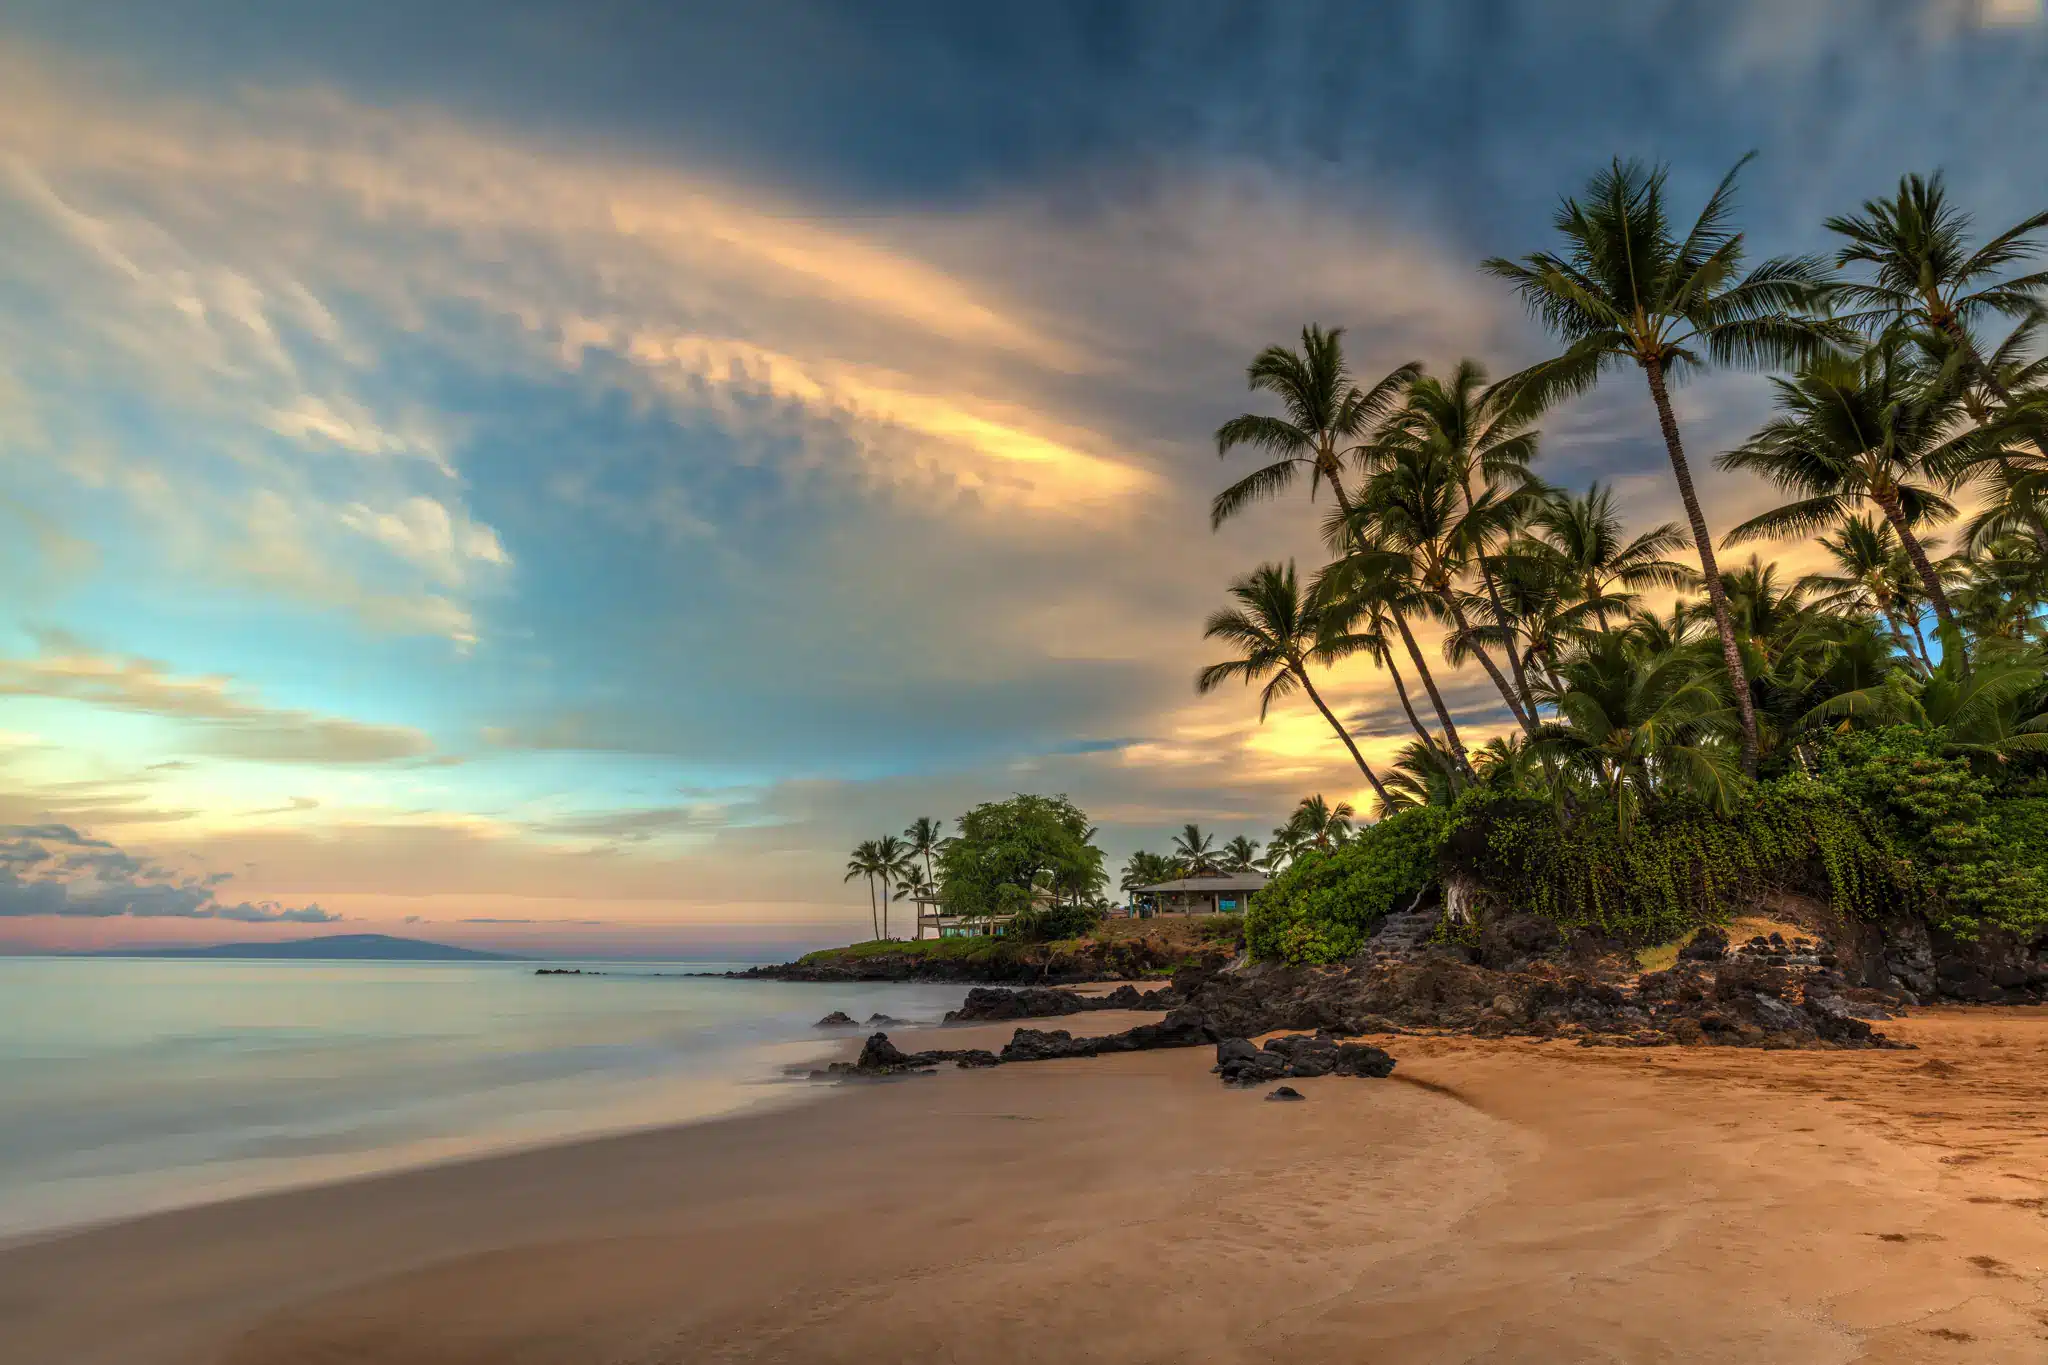 Po'olenalena Beach is a Beach located in the city of Wailea on Maui, Hawaii